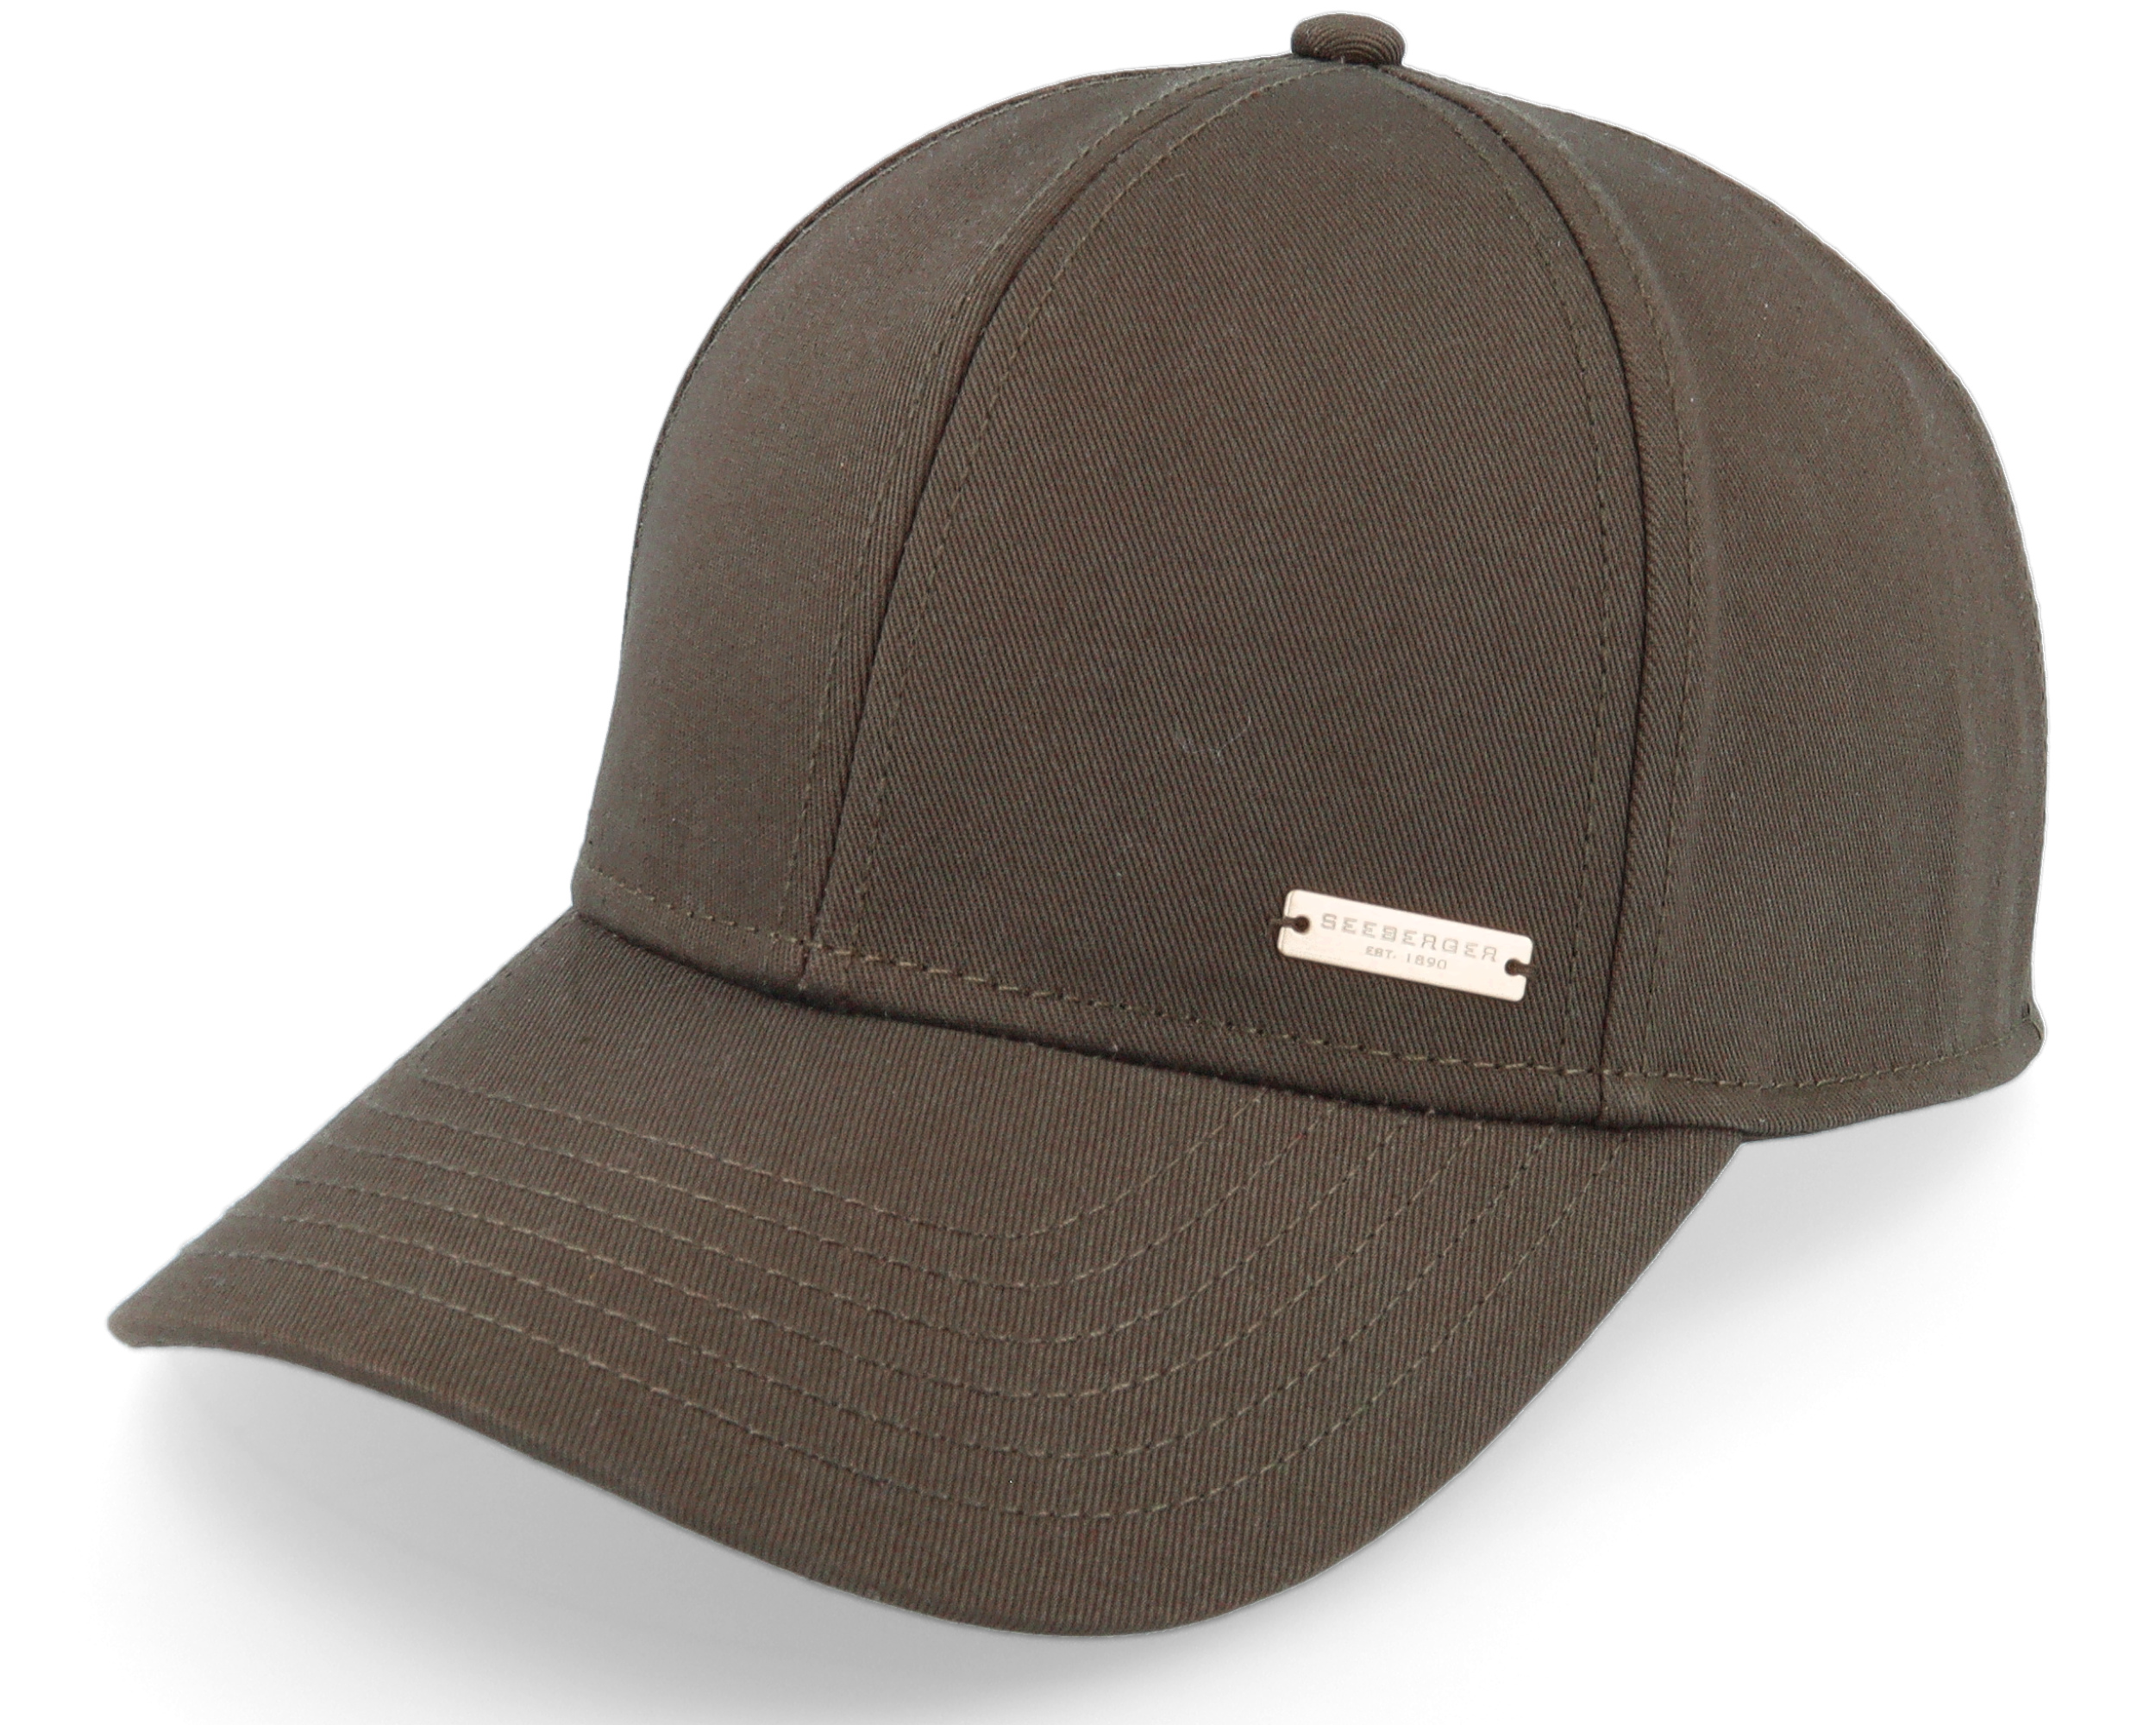 Cotton Fabric Baseball Cap Khaki Adjustable - Seeberger cap | Baseball Caps